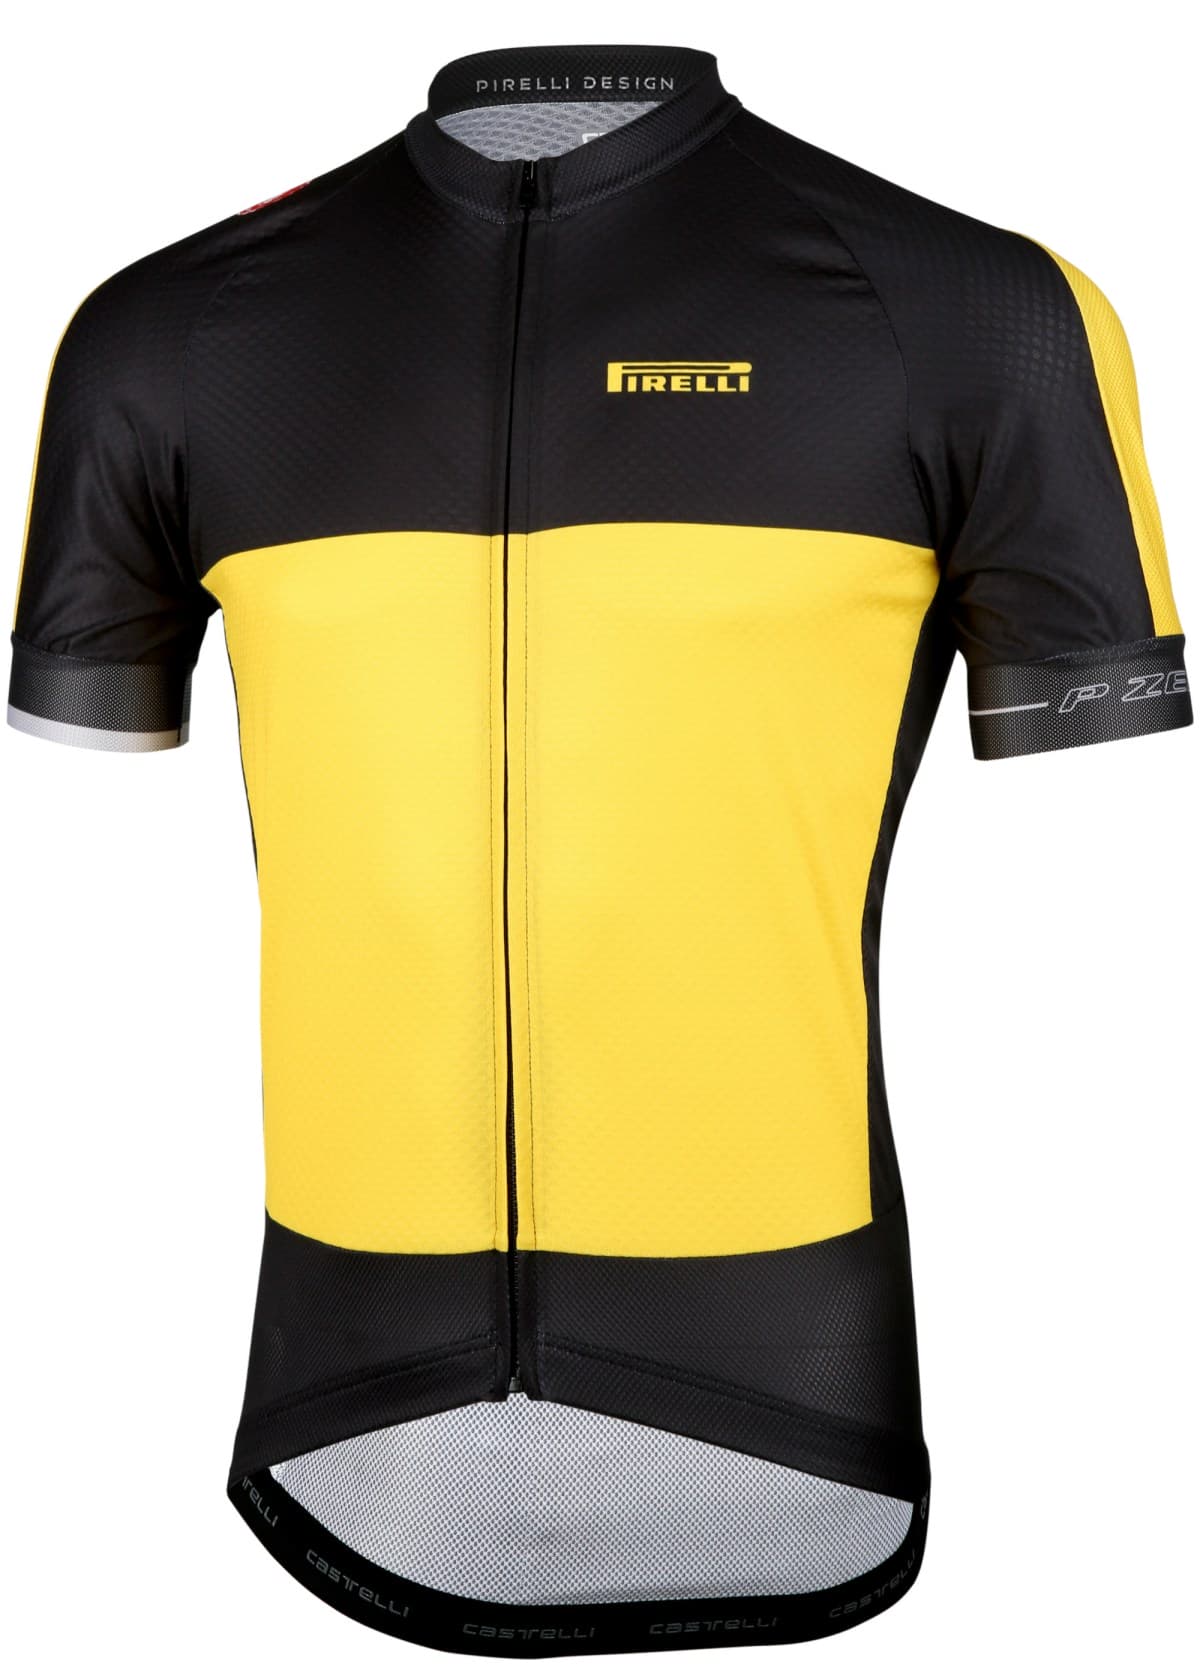 Pirelli Design Technical Cycling Jersey